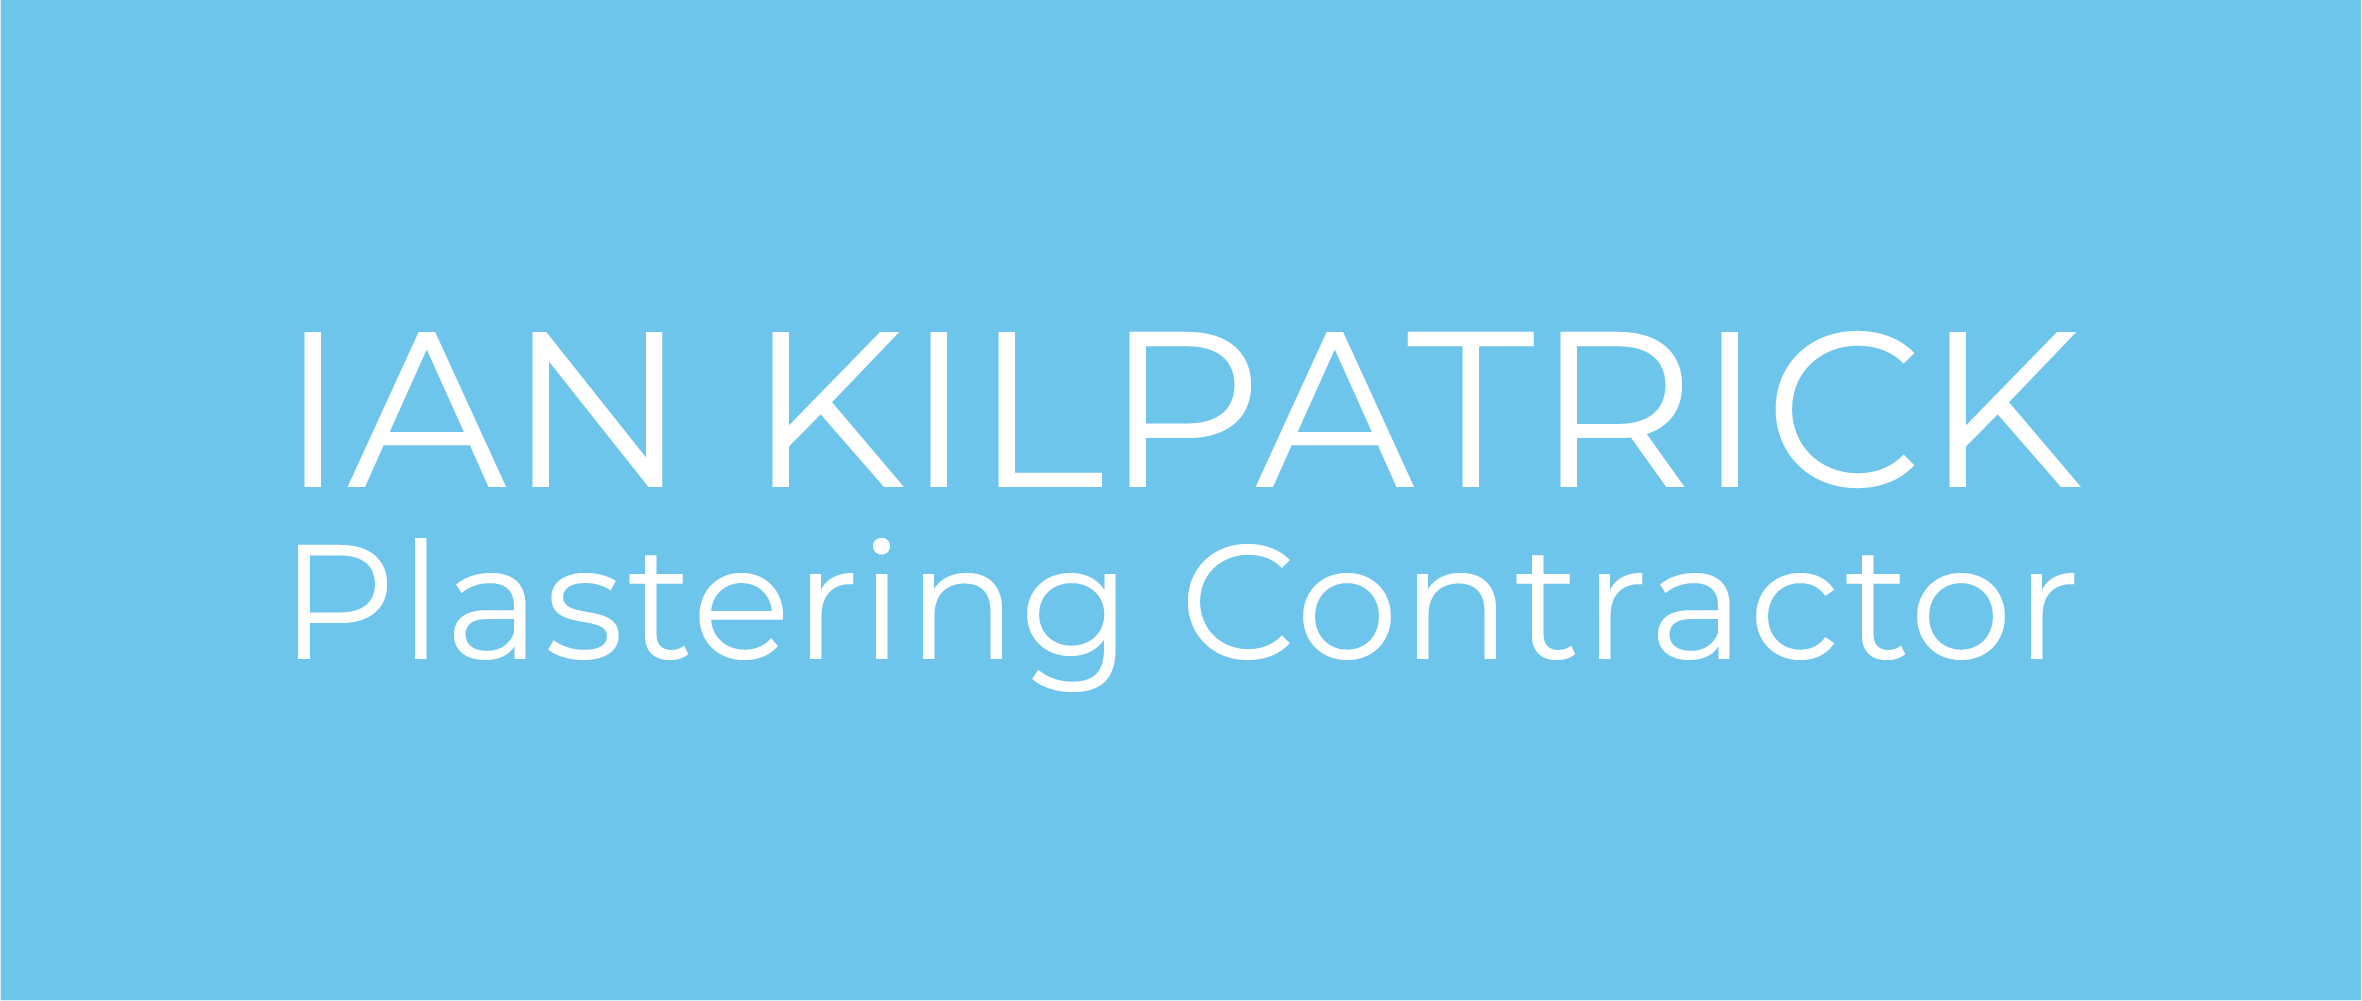 Ian Kilpatrick Plastering Contractor